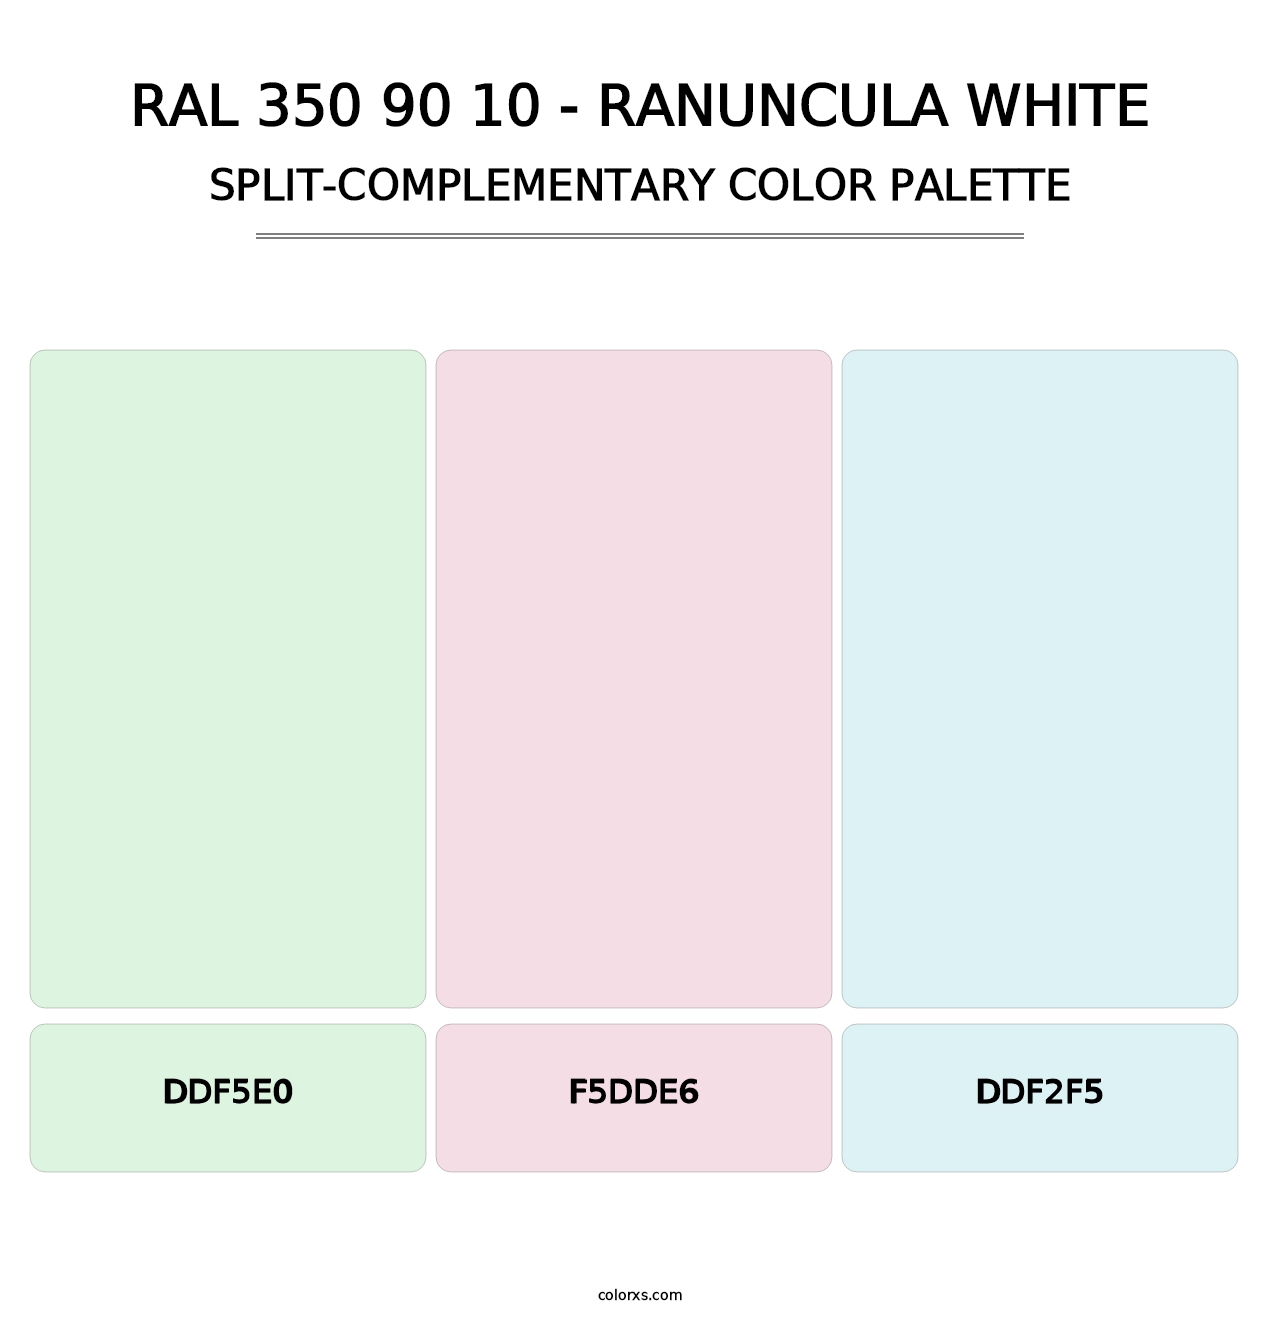 RAL 350 90 10 - Ranuncula White - Split-Complementary Color Palette